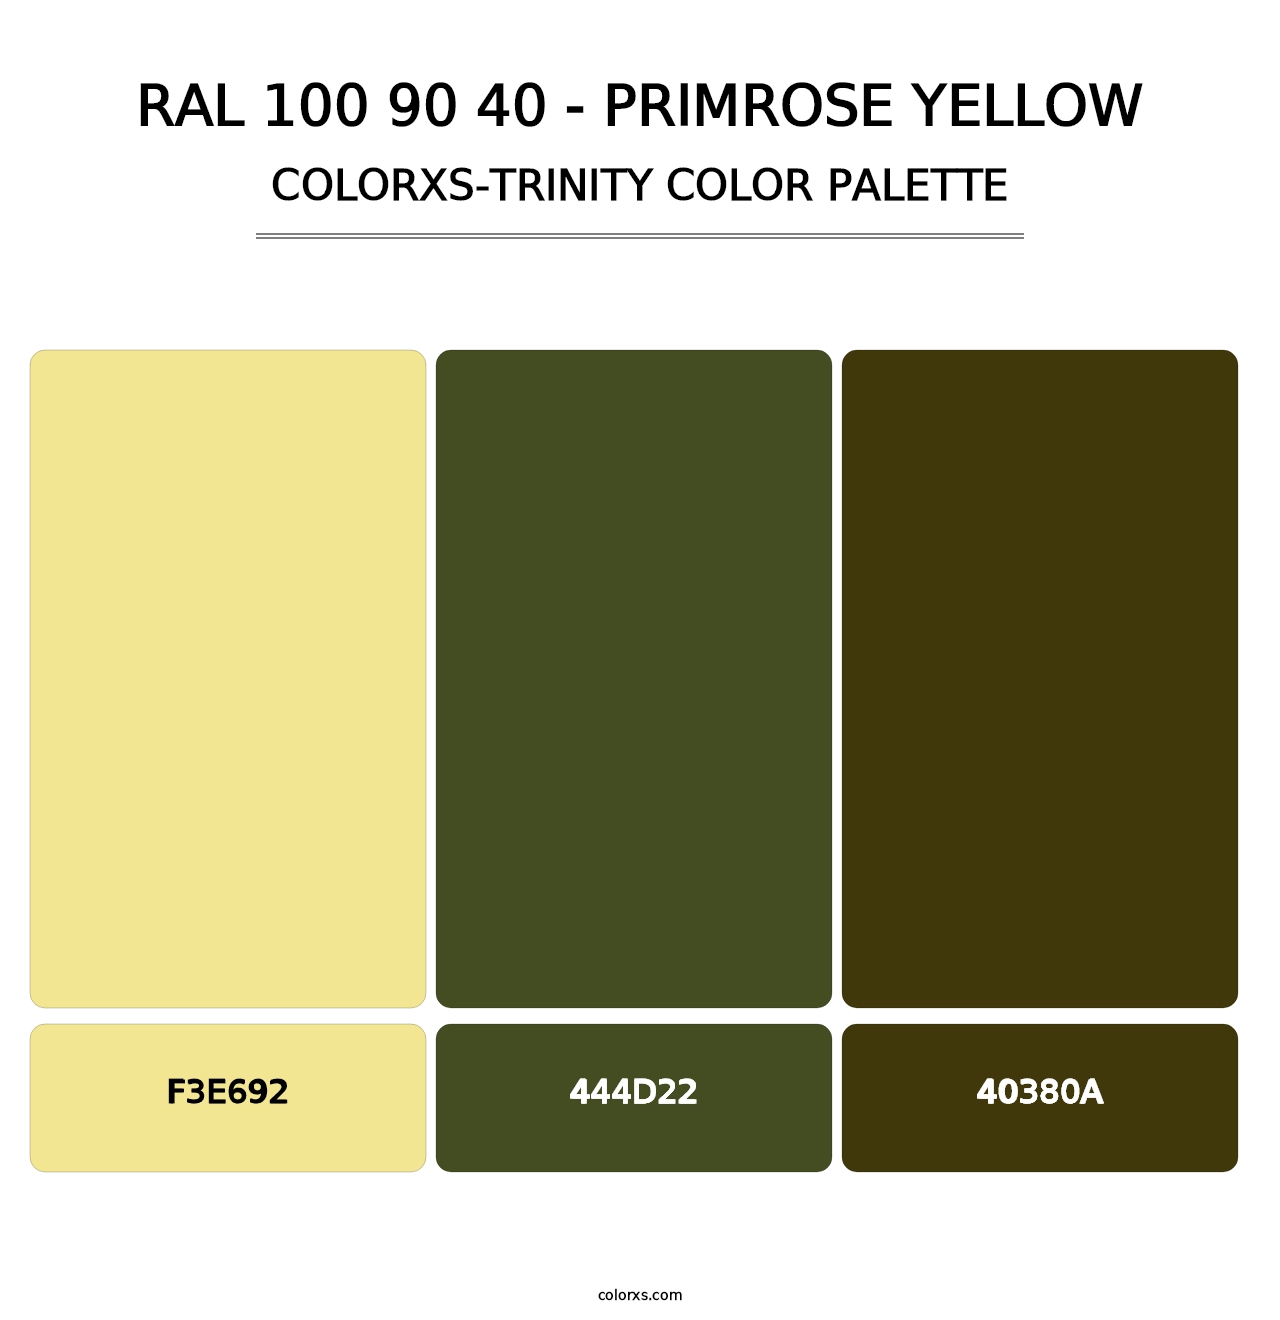 RAL 100 90 40 - Primrose Yellow - Colorxs Trinity Palette